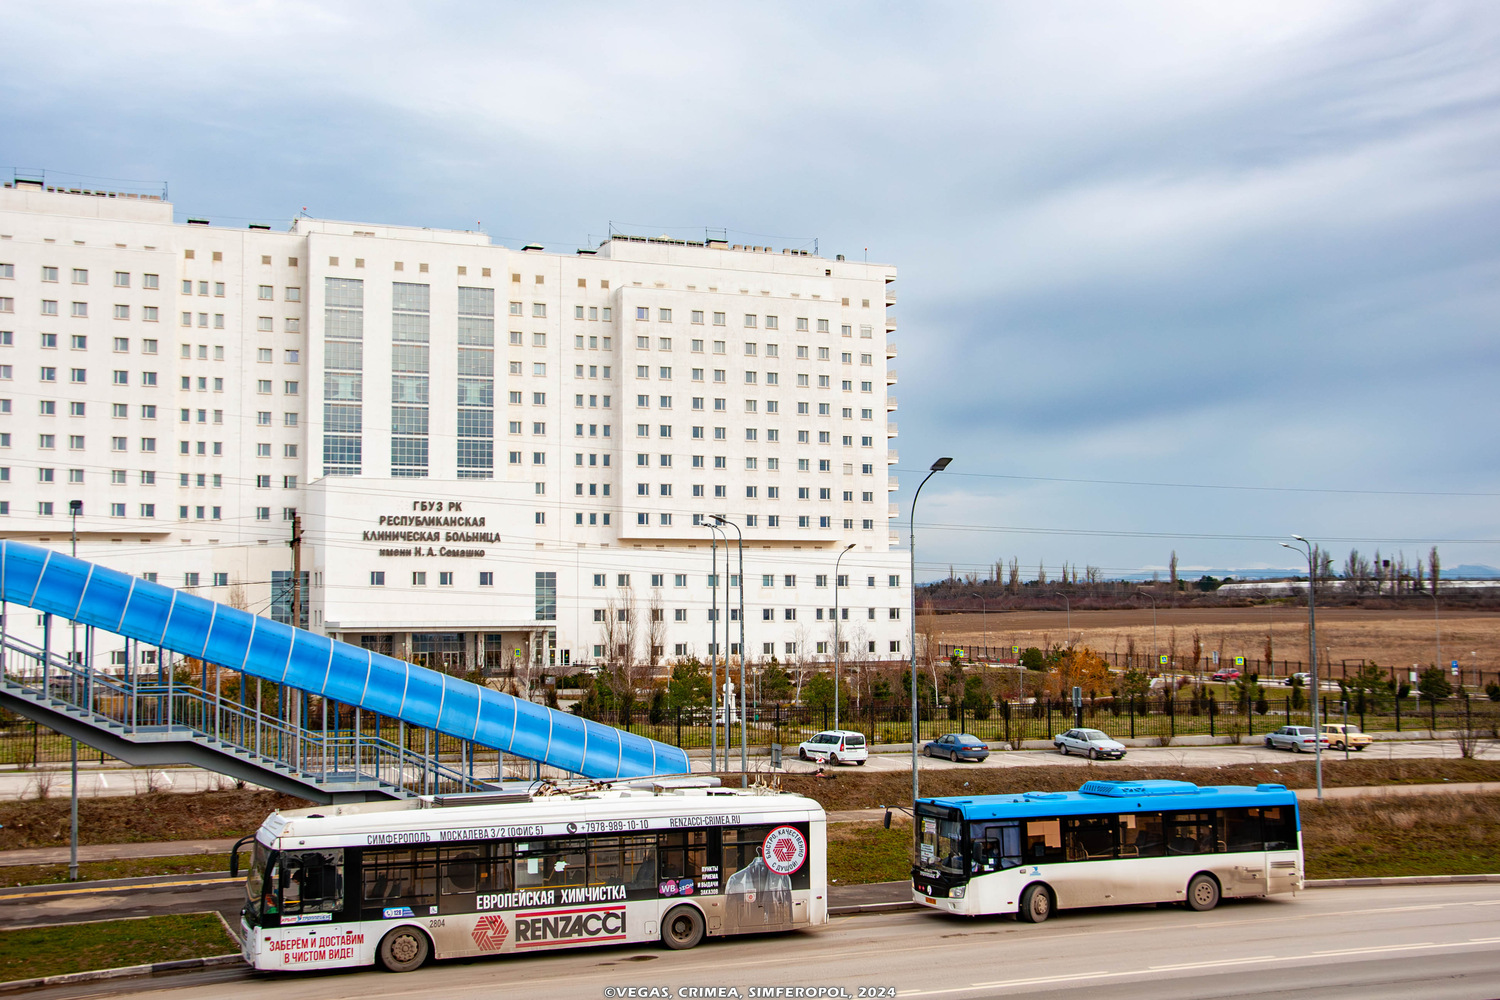 Krimski trolejbus, Trolza-5265.03 “Megapolis” č. 2804; Krimski trolejbus — The movement of trolleybuses without CS (autonomous running).